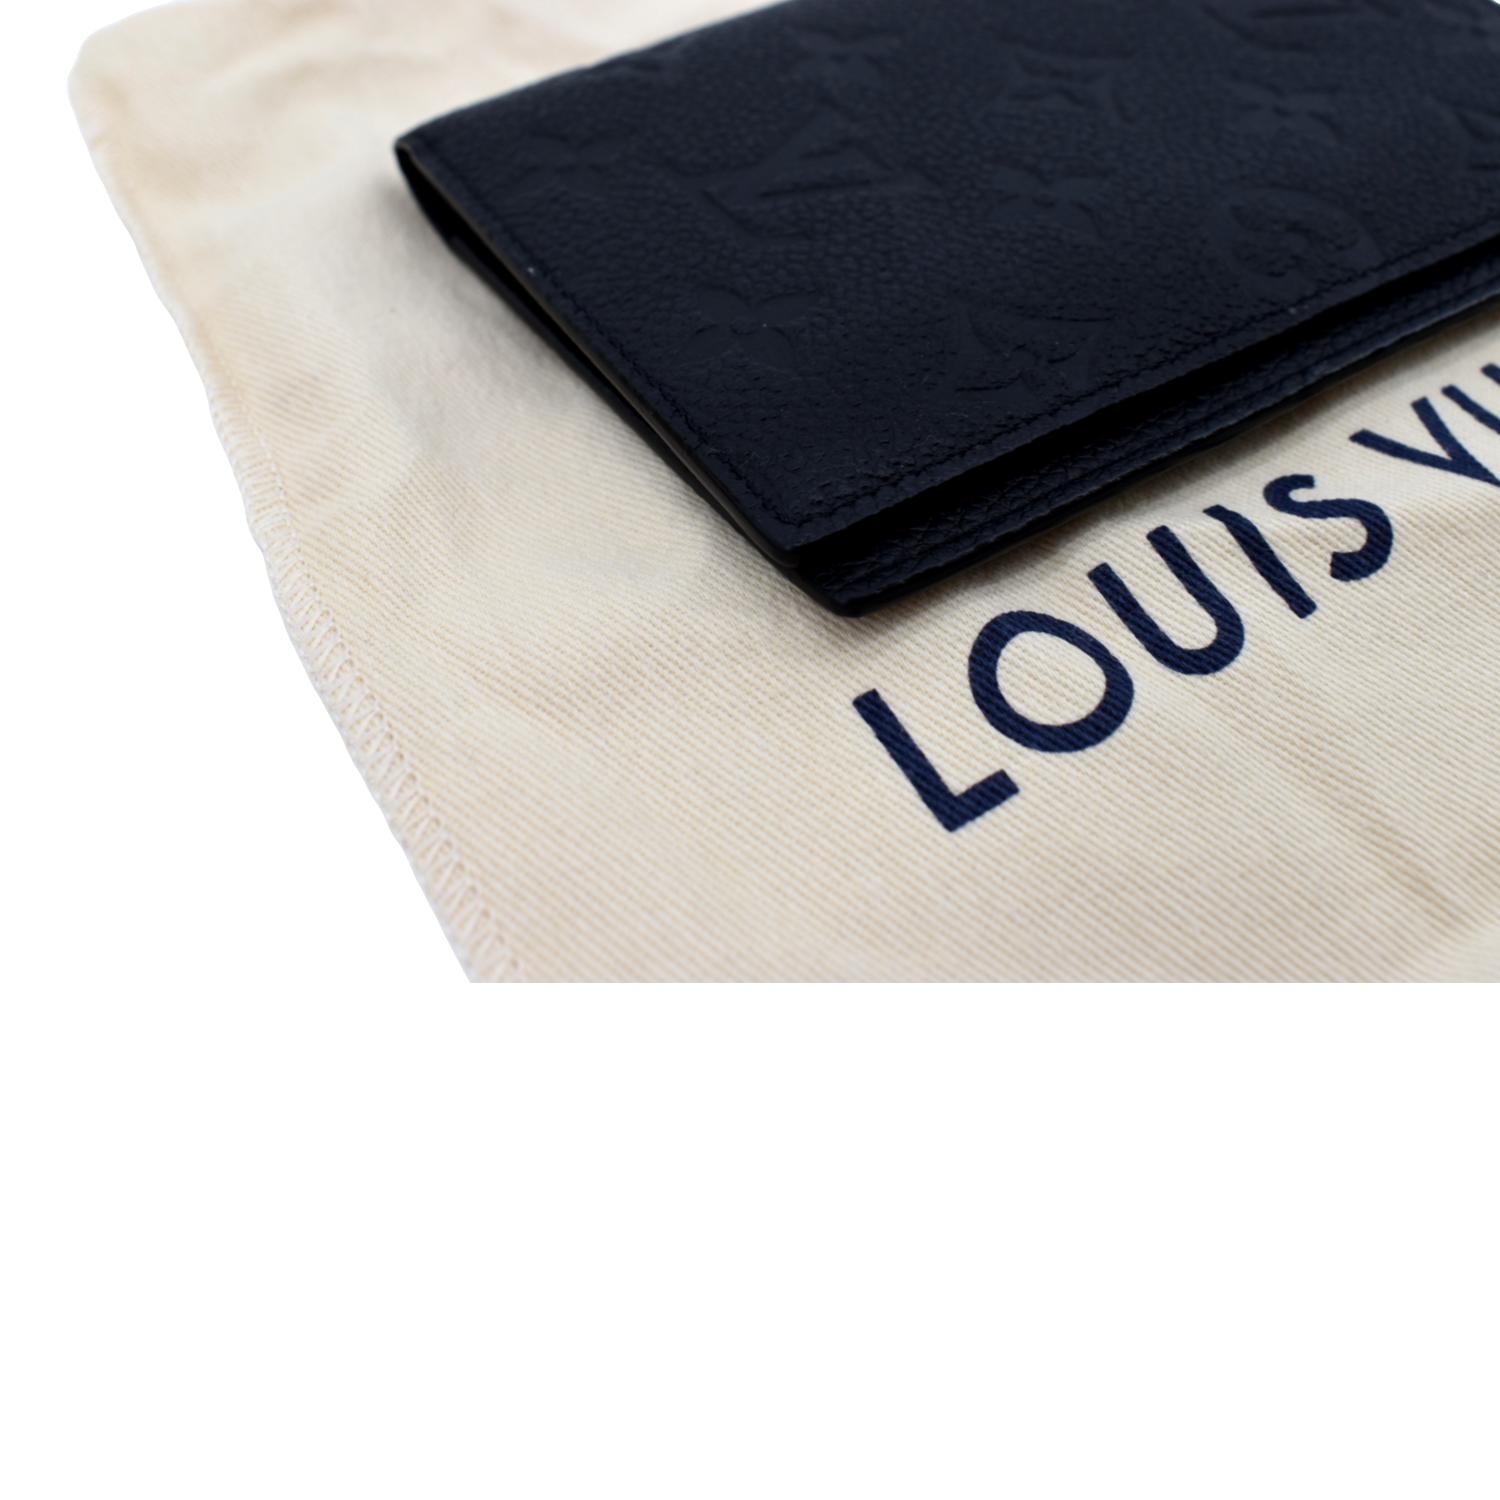 Louis Vuitton Passport Cover Monogram Empreinte Leather Black 2015231